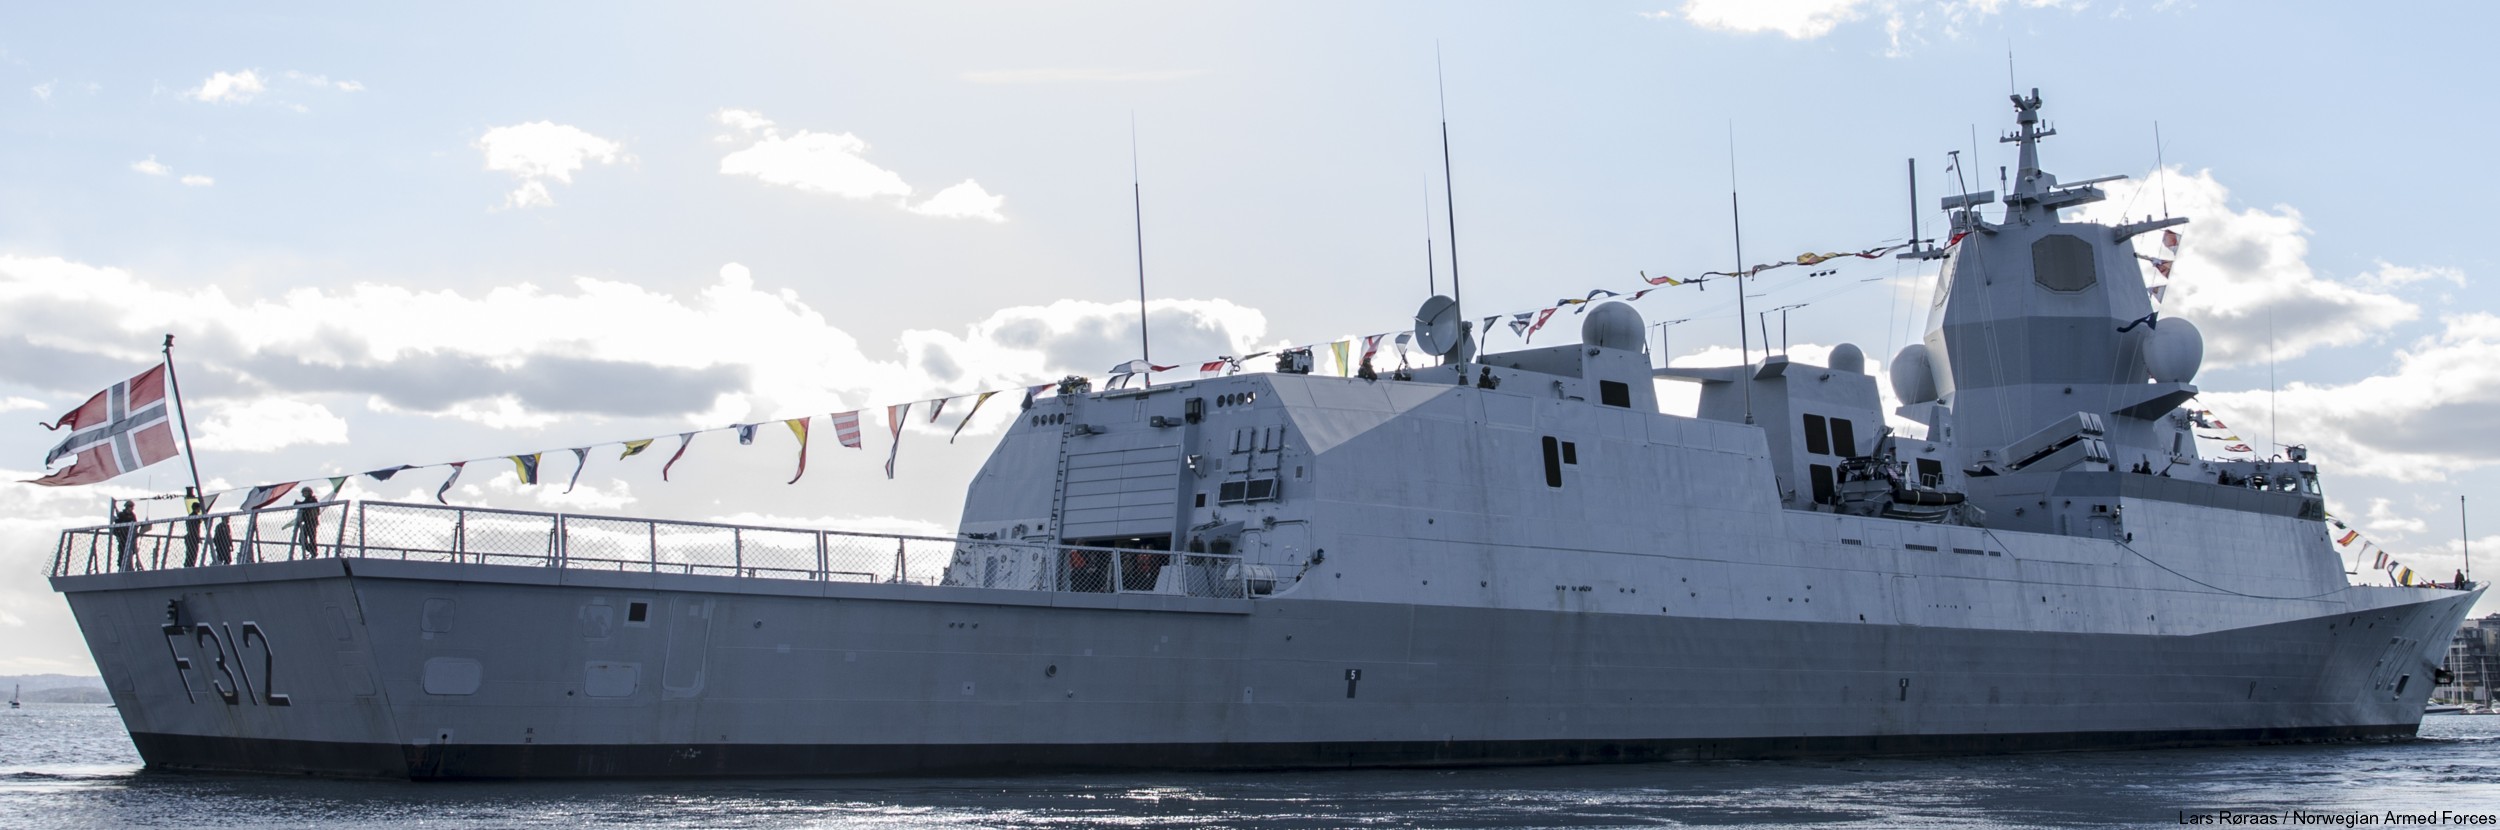 f-312 otto sverdrup hnoms knm fridtjof nansen class frigate royal norwegian navy 21